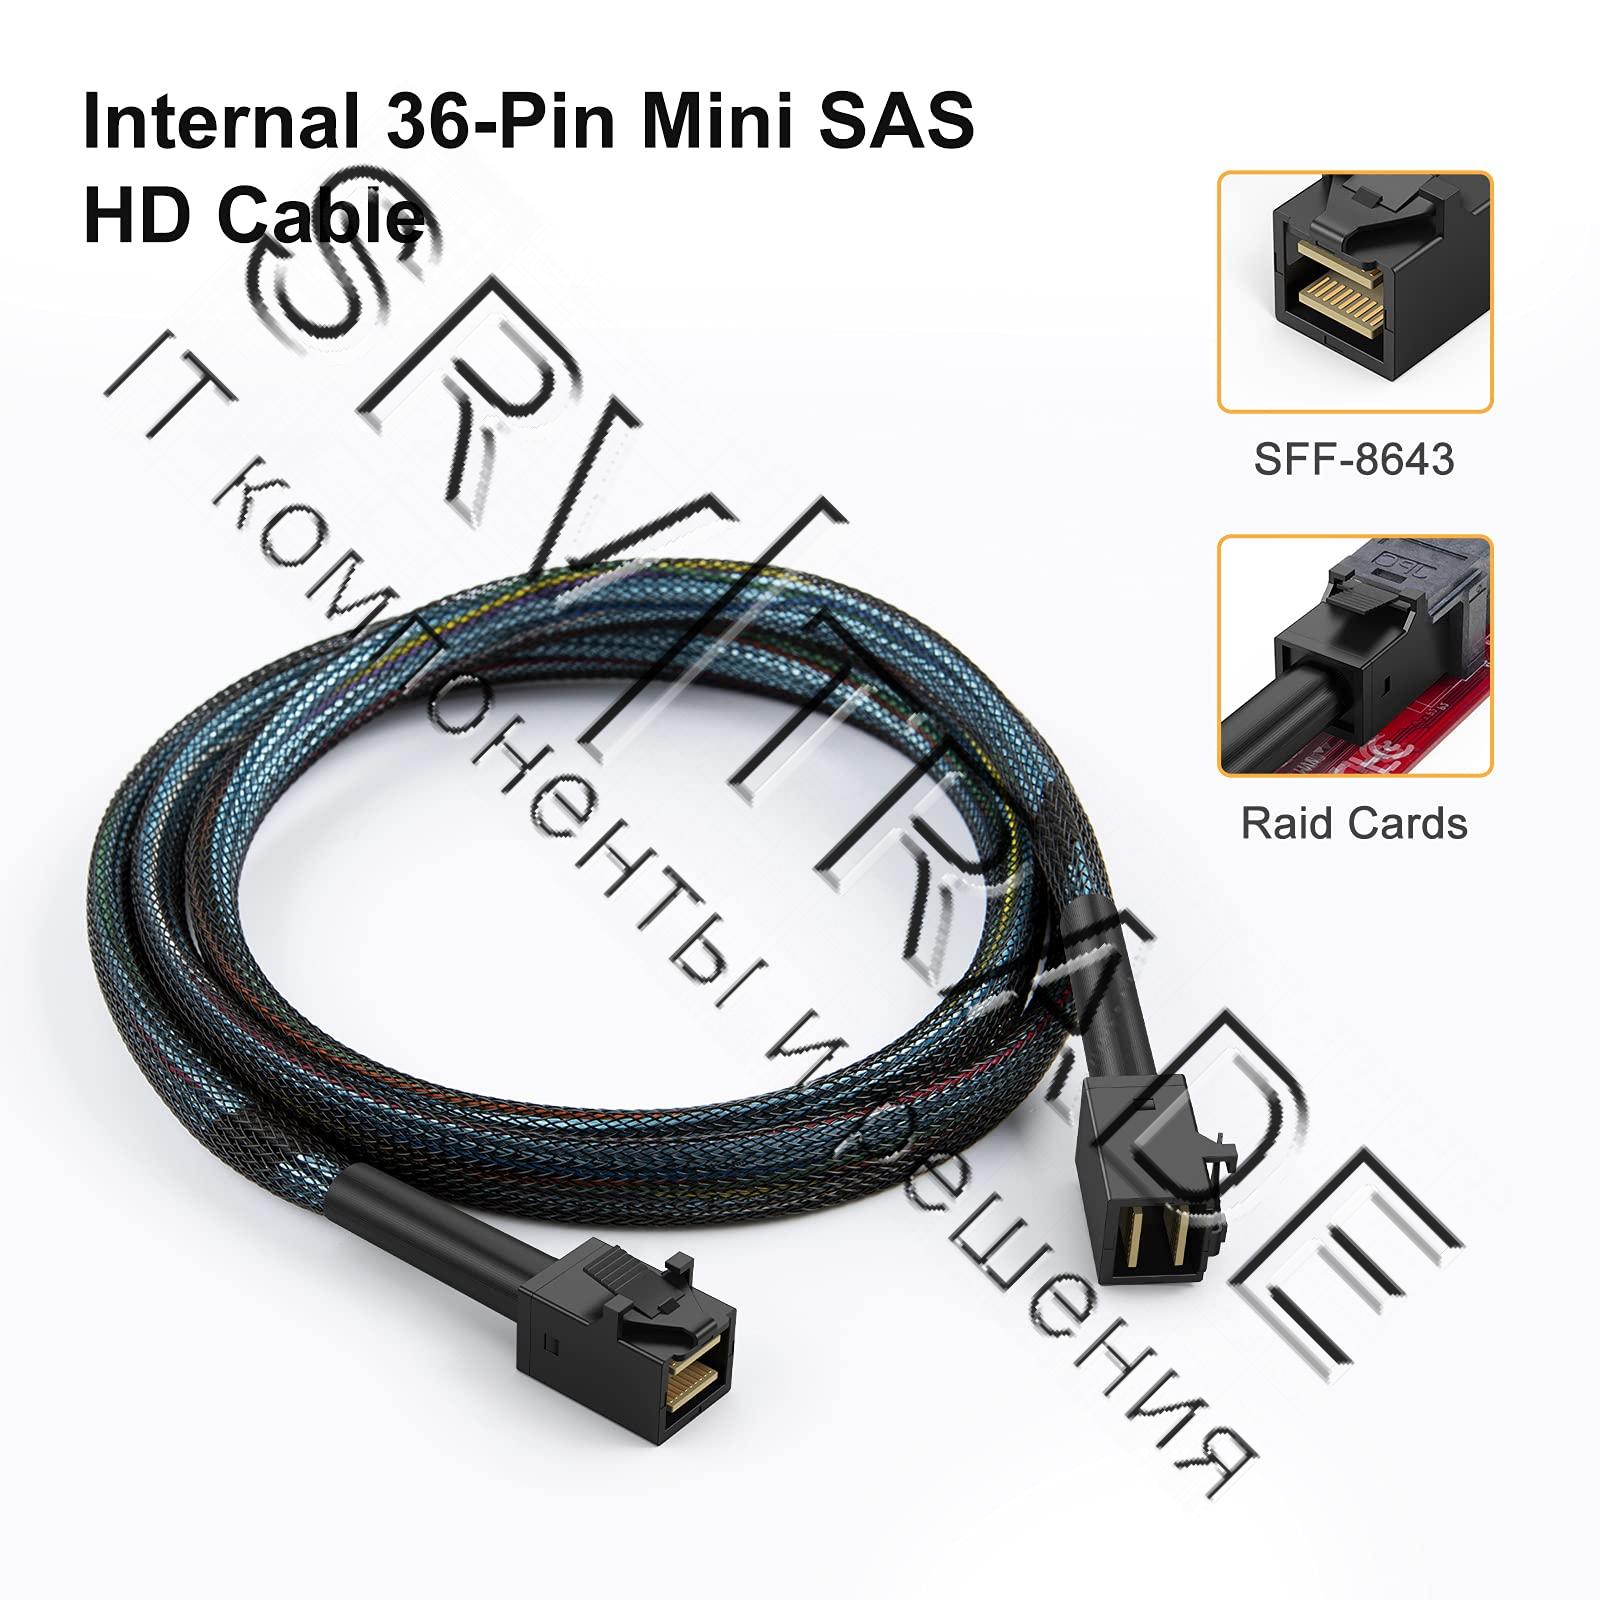 Расширители портов и кабели HD Mini-SAS Cable Kit, 2 x 800mm cables, straight SFF-8643 to straight S